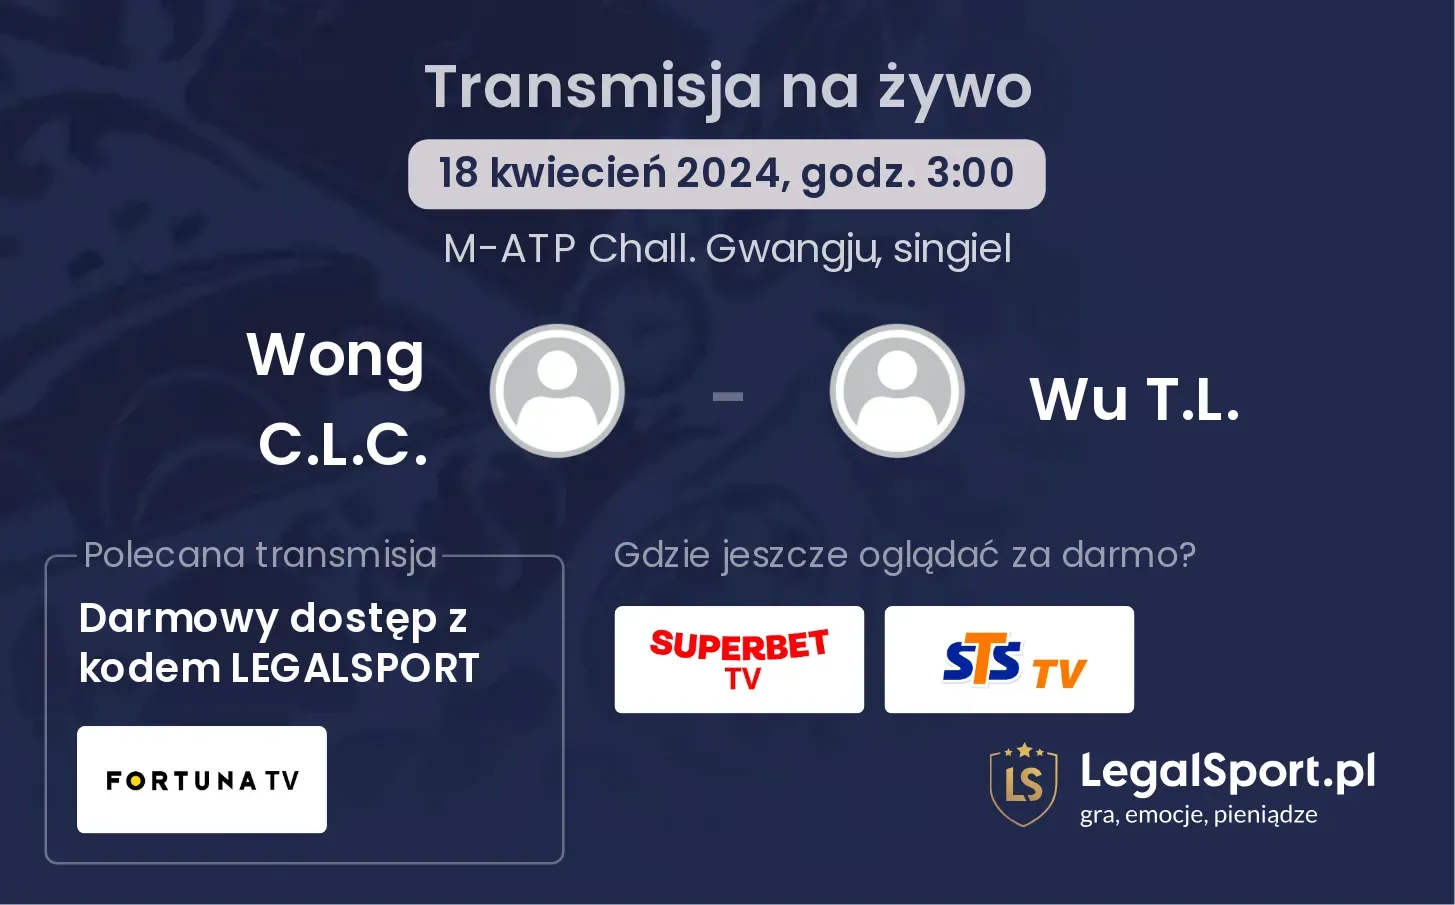 Wong C.L.C. - Wu T.L. transmisja na żywo